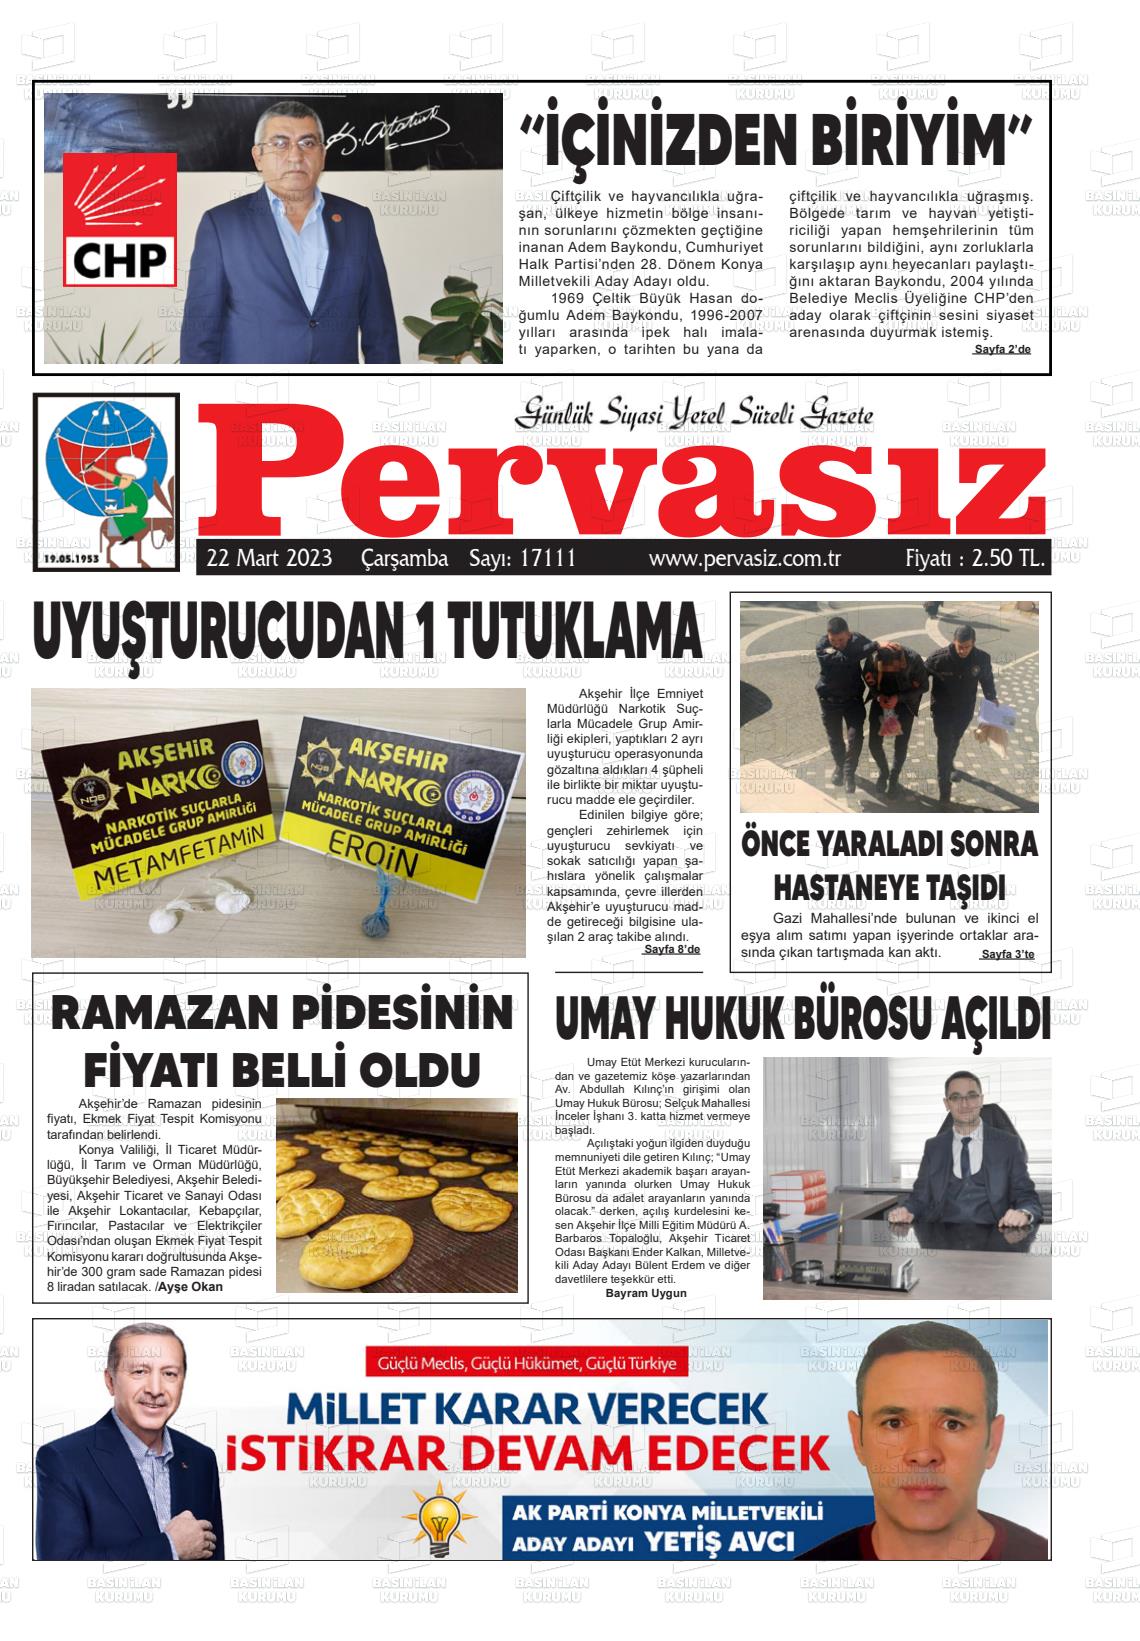 22 Mart 2023 Konya Pervasız Gazete Manşeti